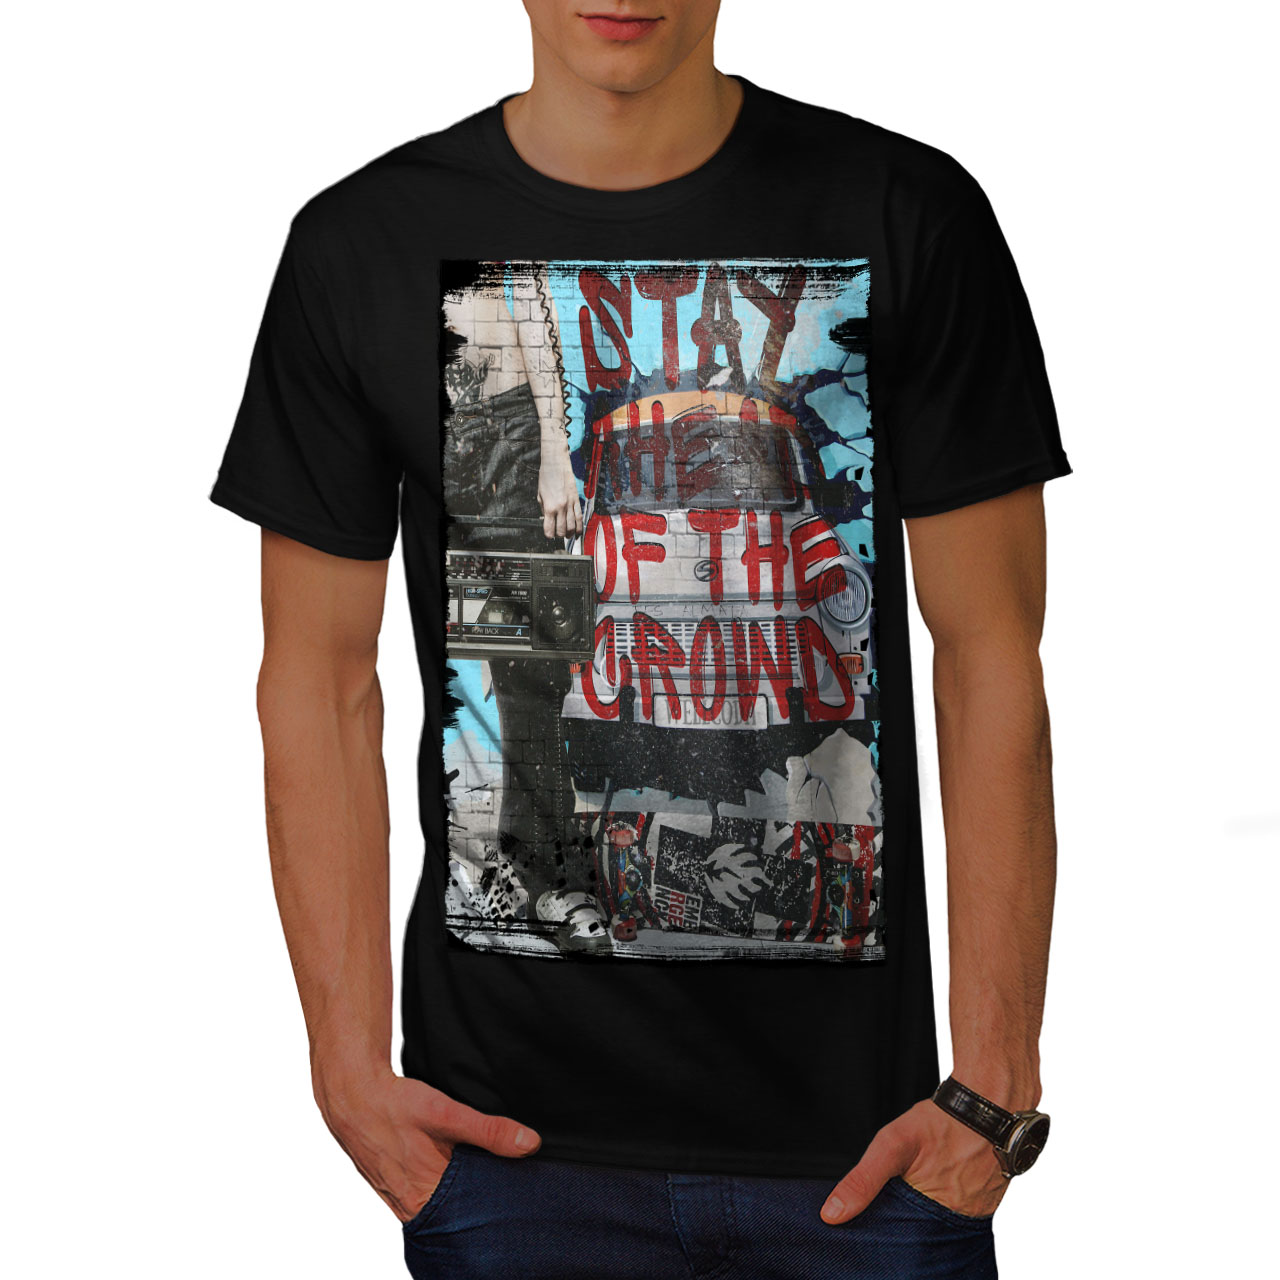 Wellcoda Urban Graphic Mens T-shirt, Graffiti Graphic Design Printed ...